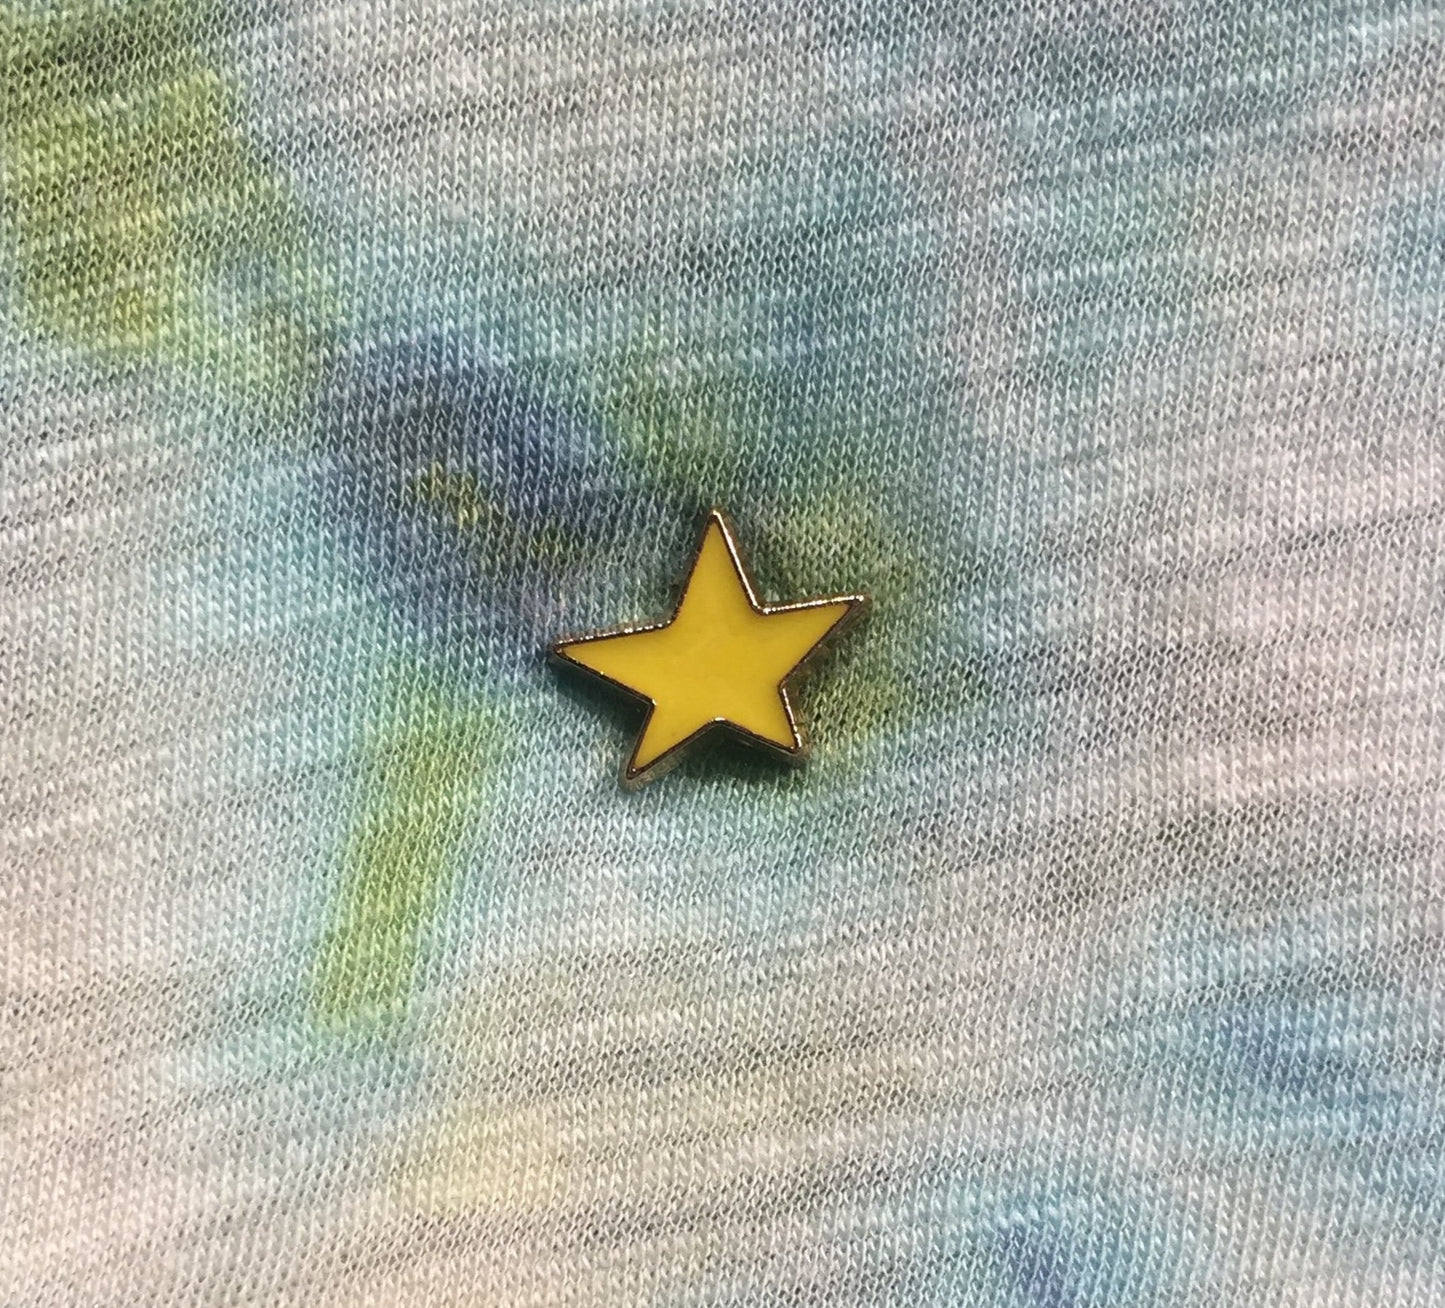 YELLOW STAR PIN